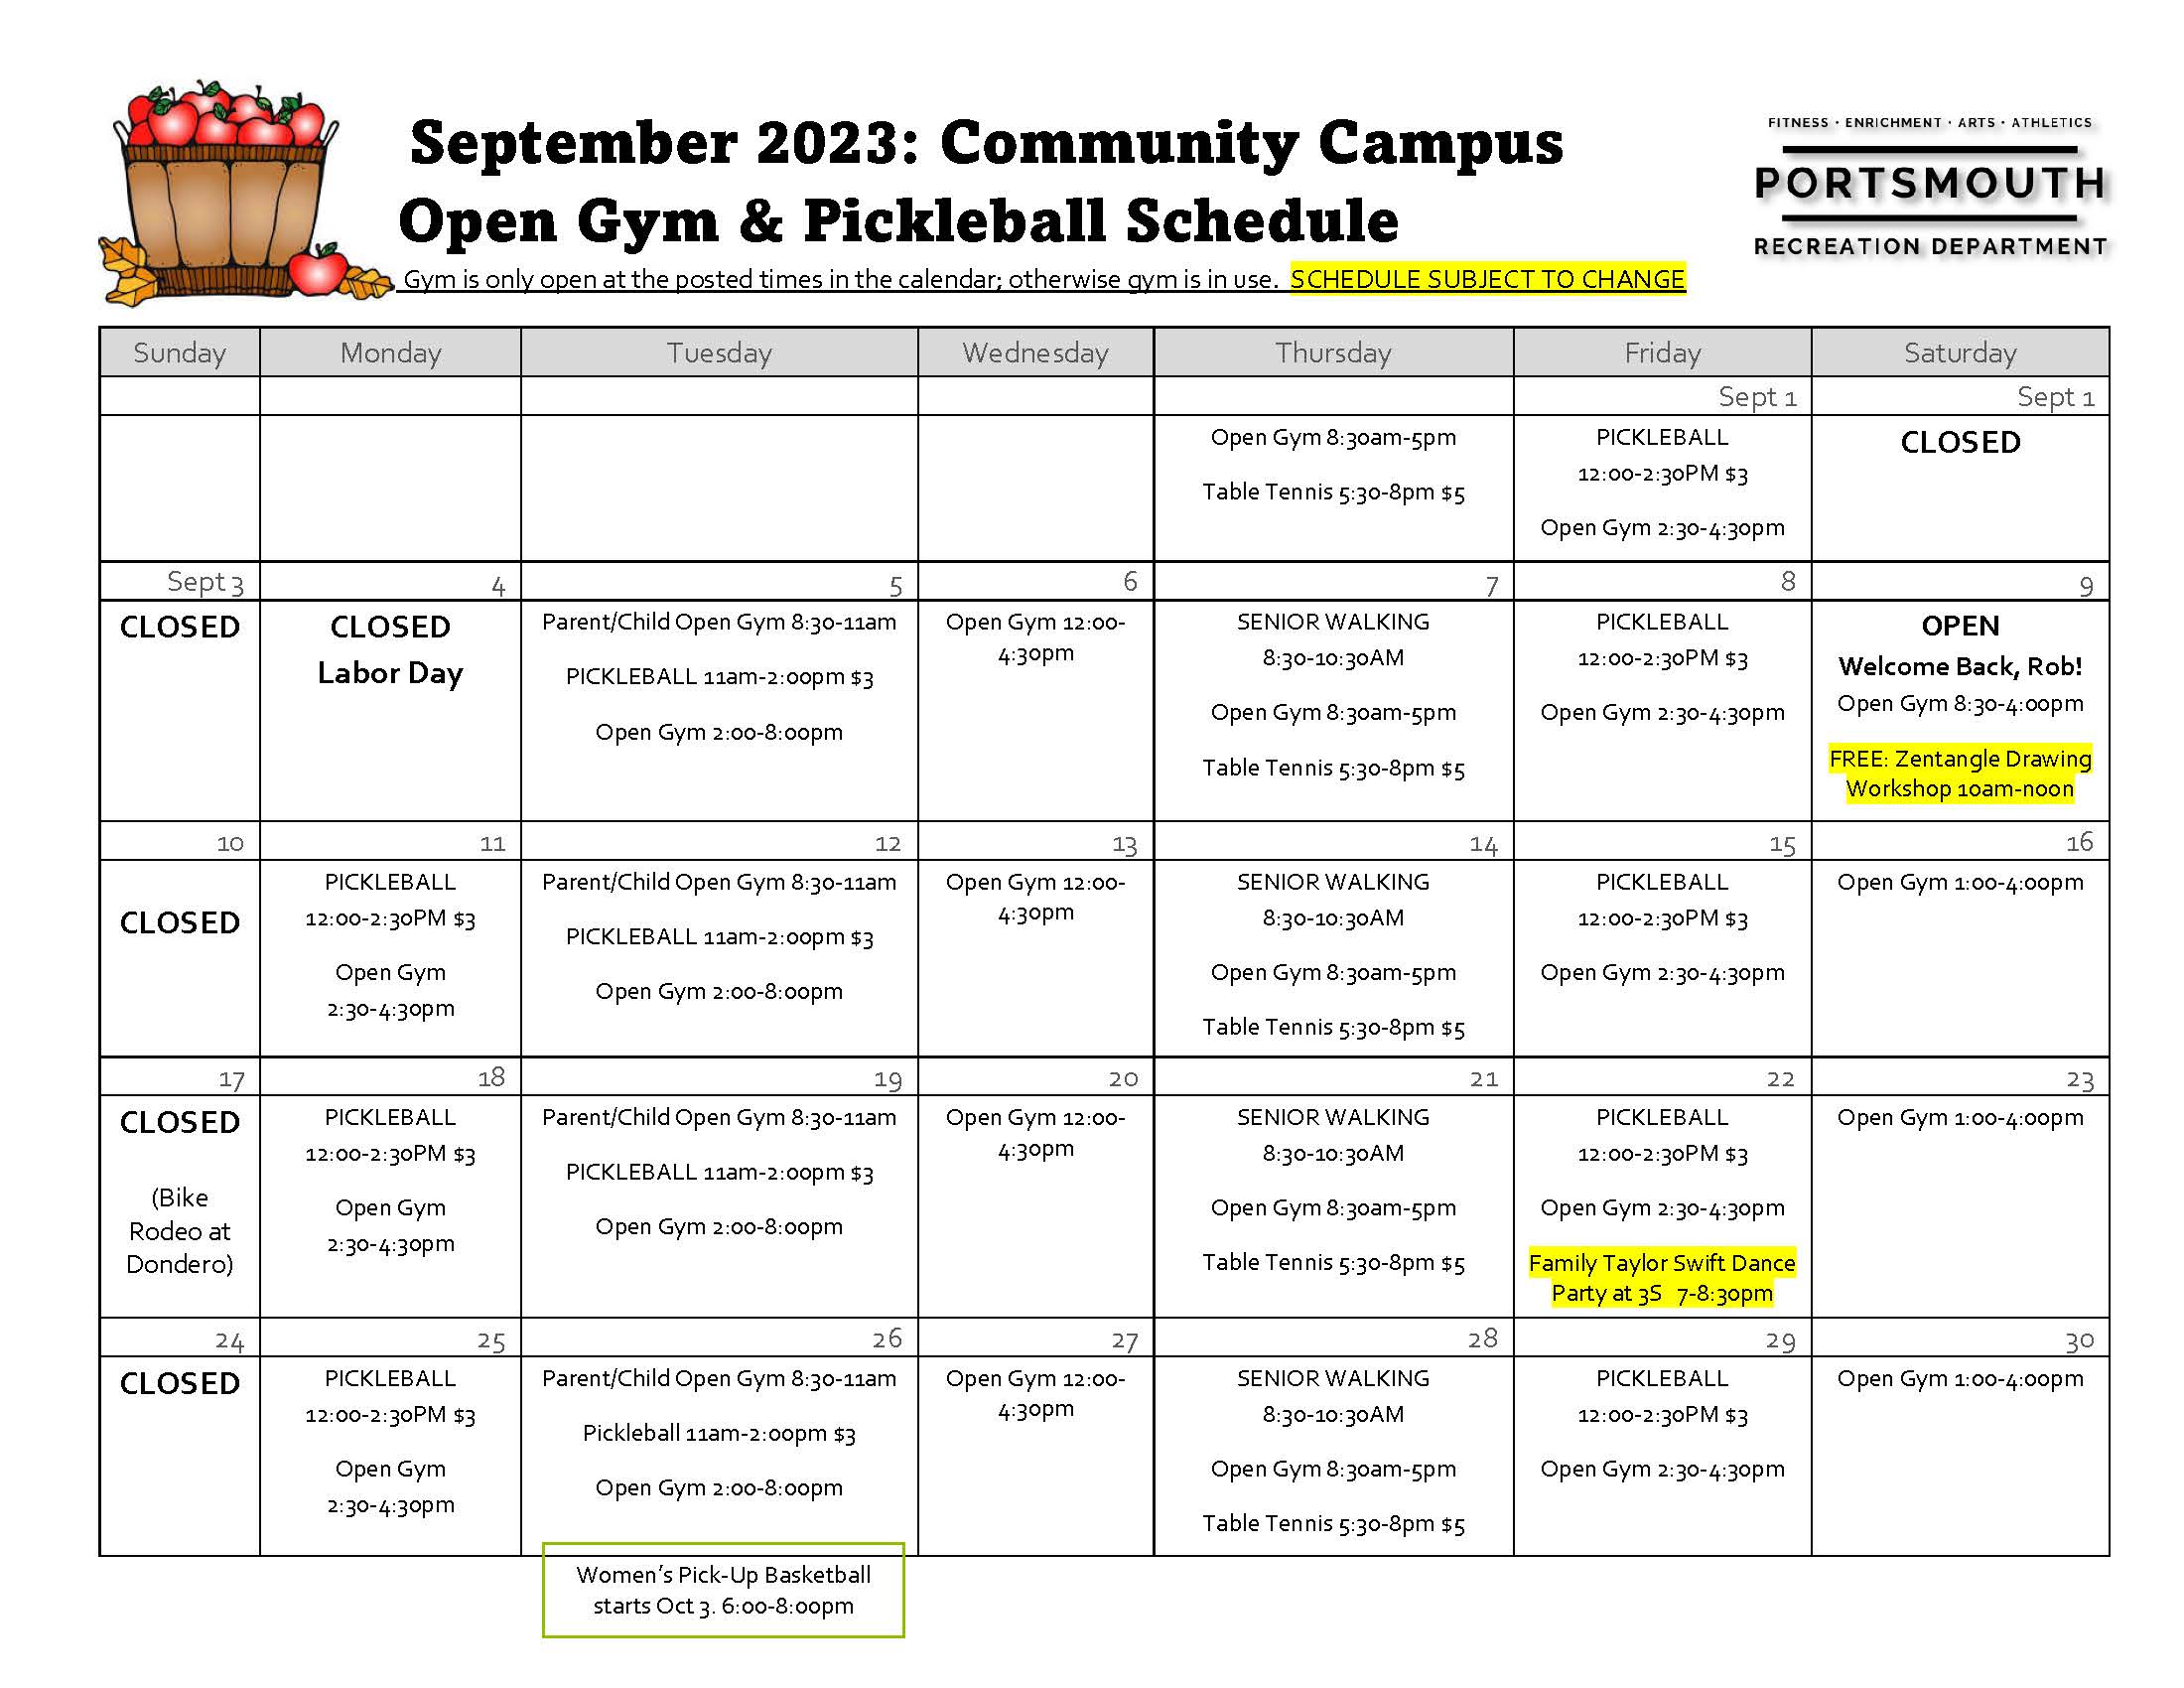 Open Gym Schedule - September 2023 - Community Campus